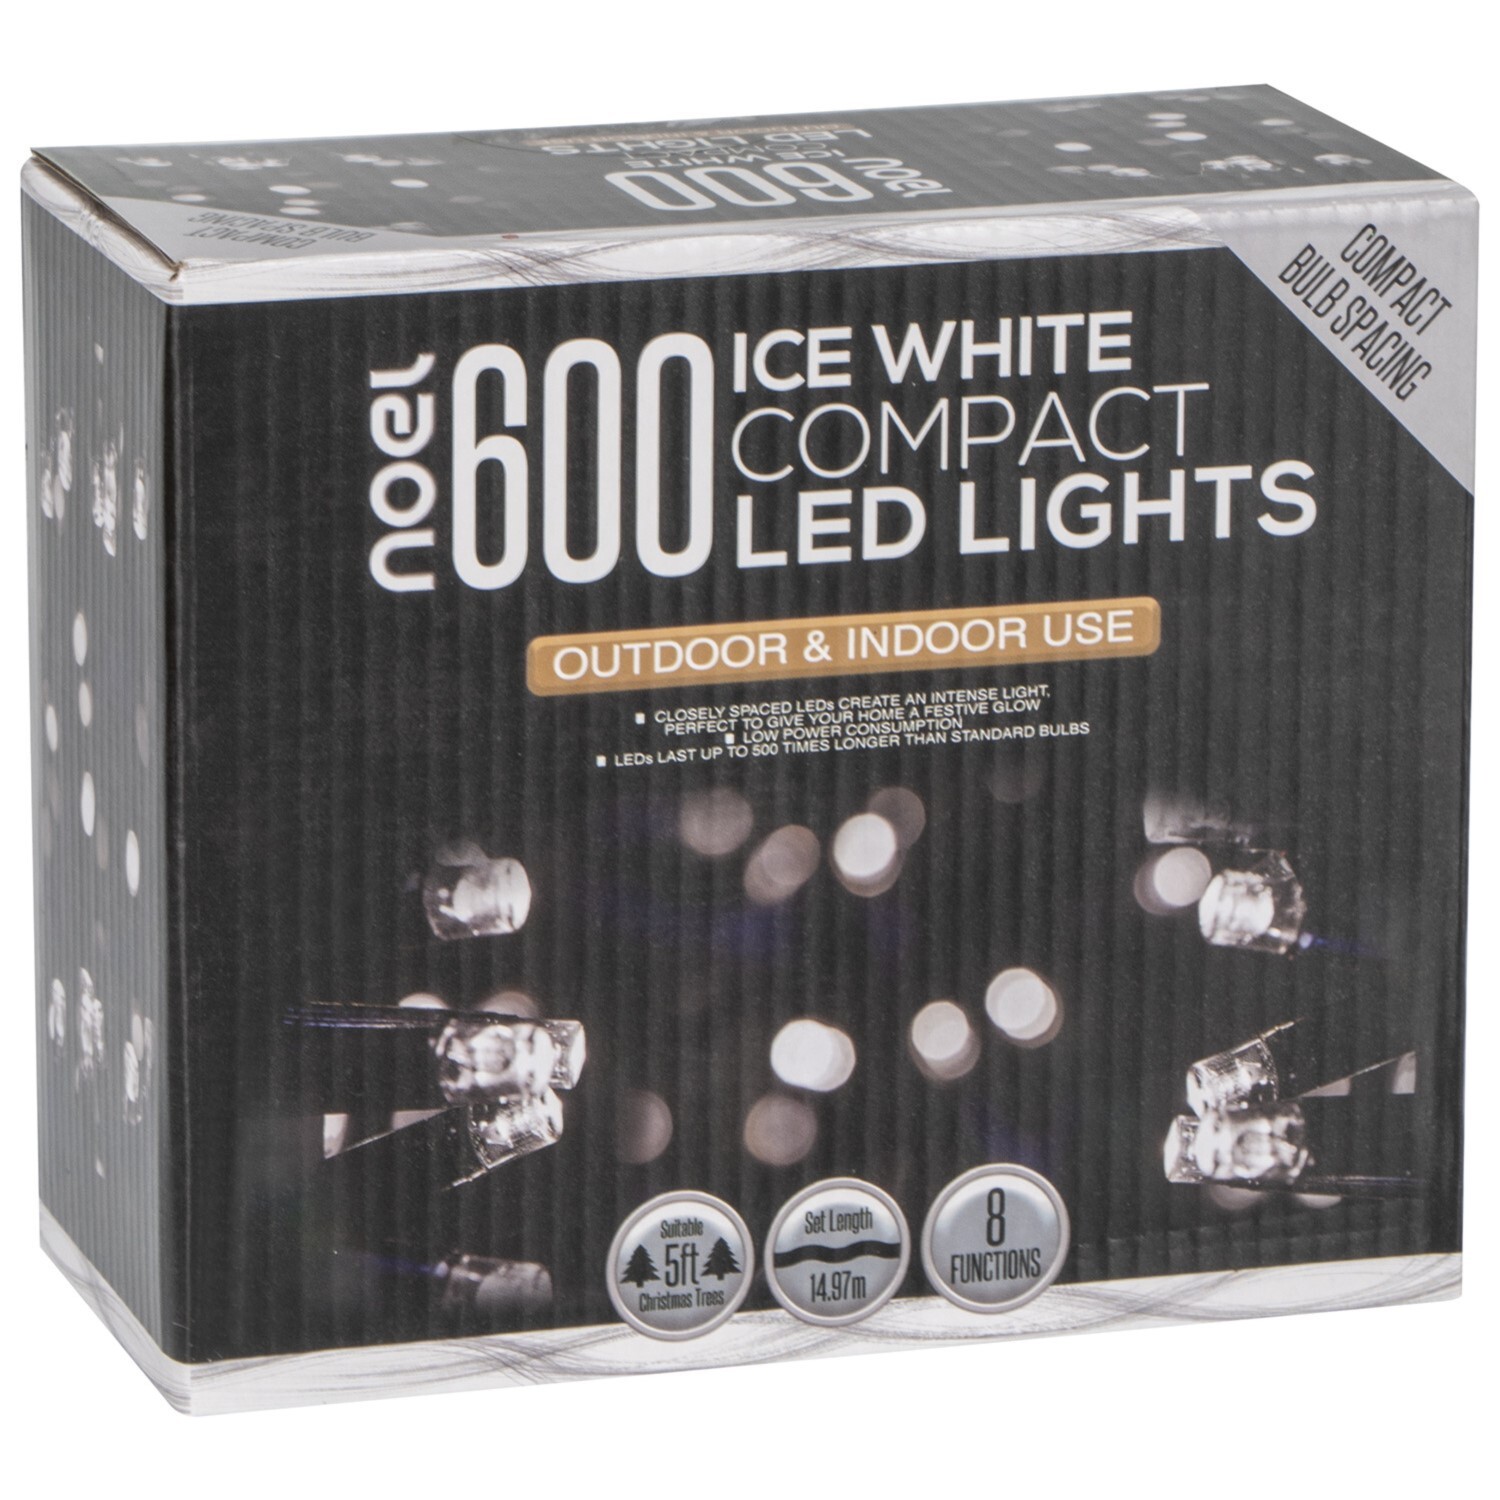 600 Compact LED Lightchain - Ice White Image 2